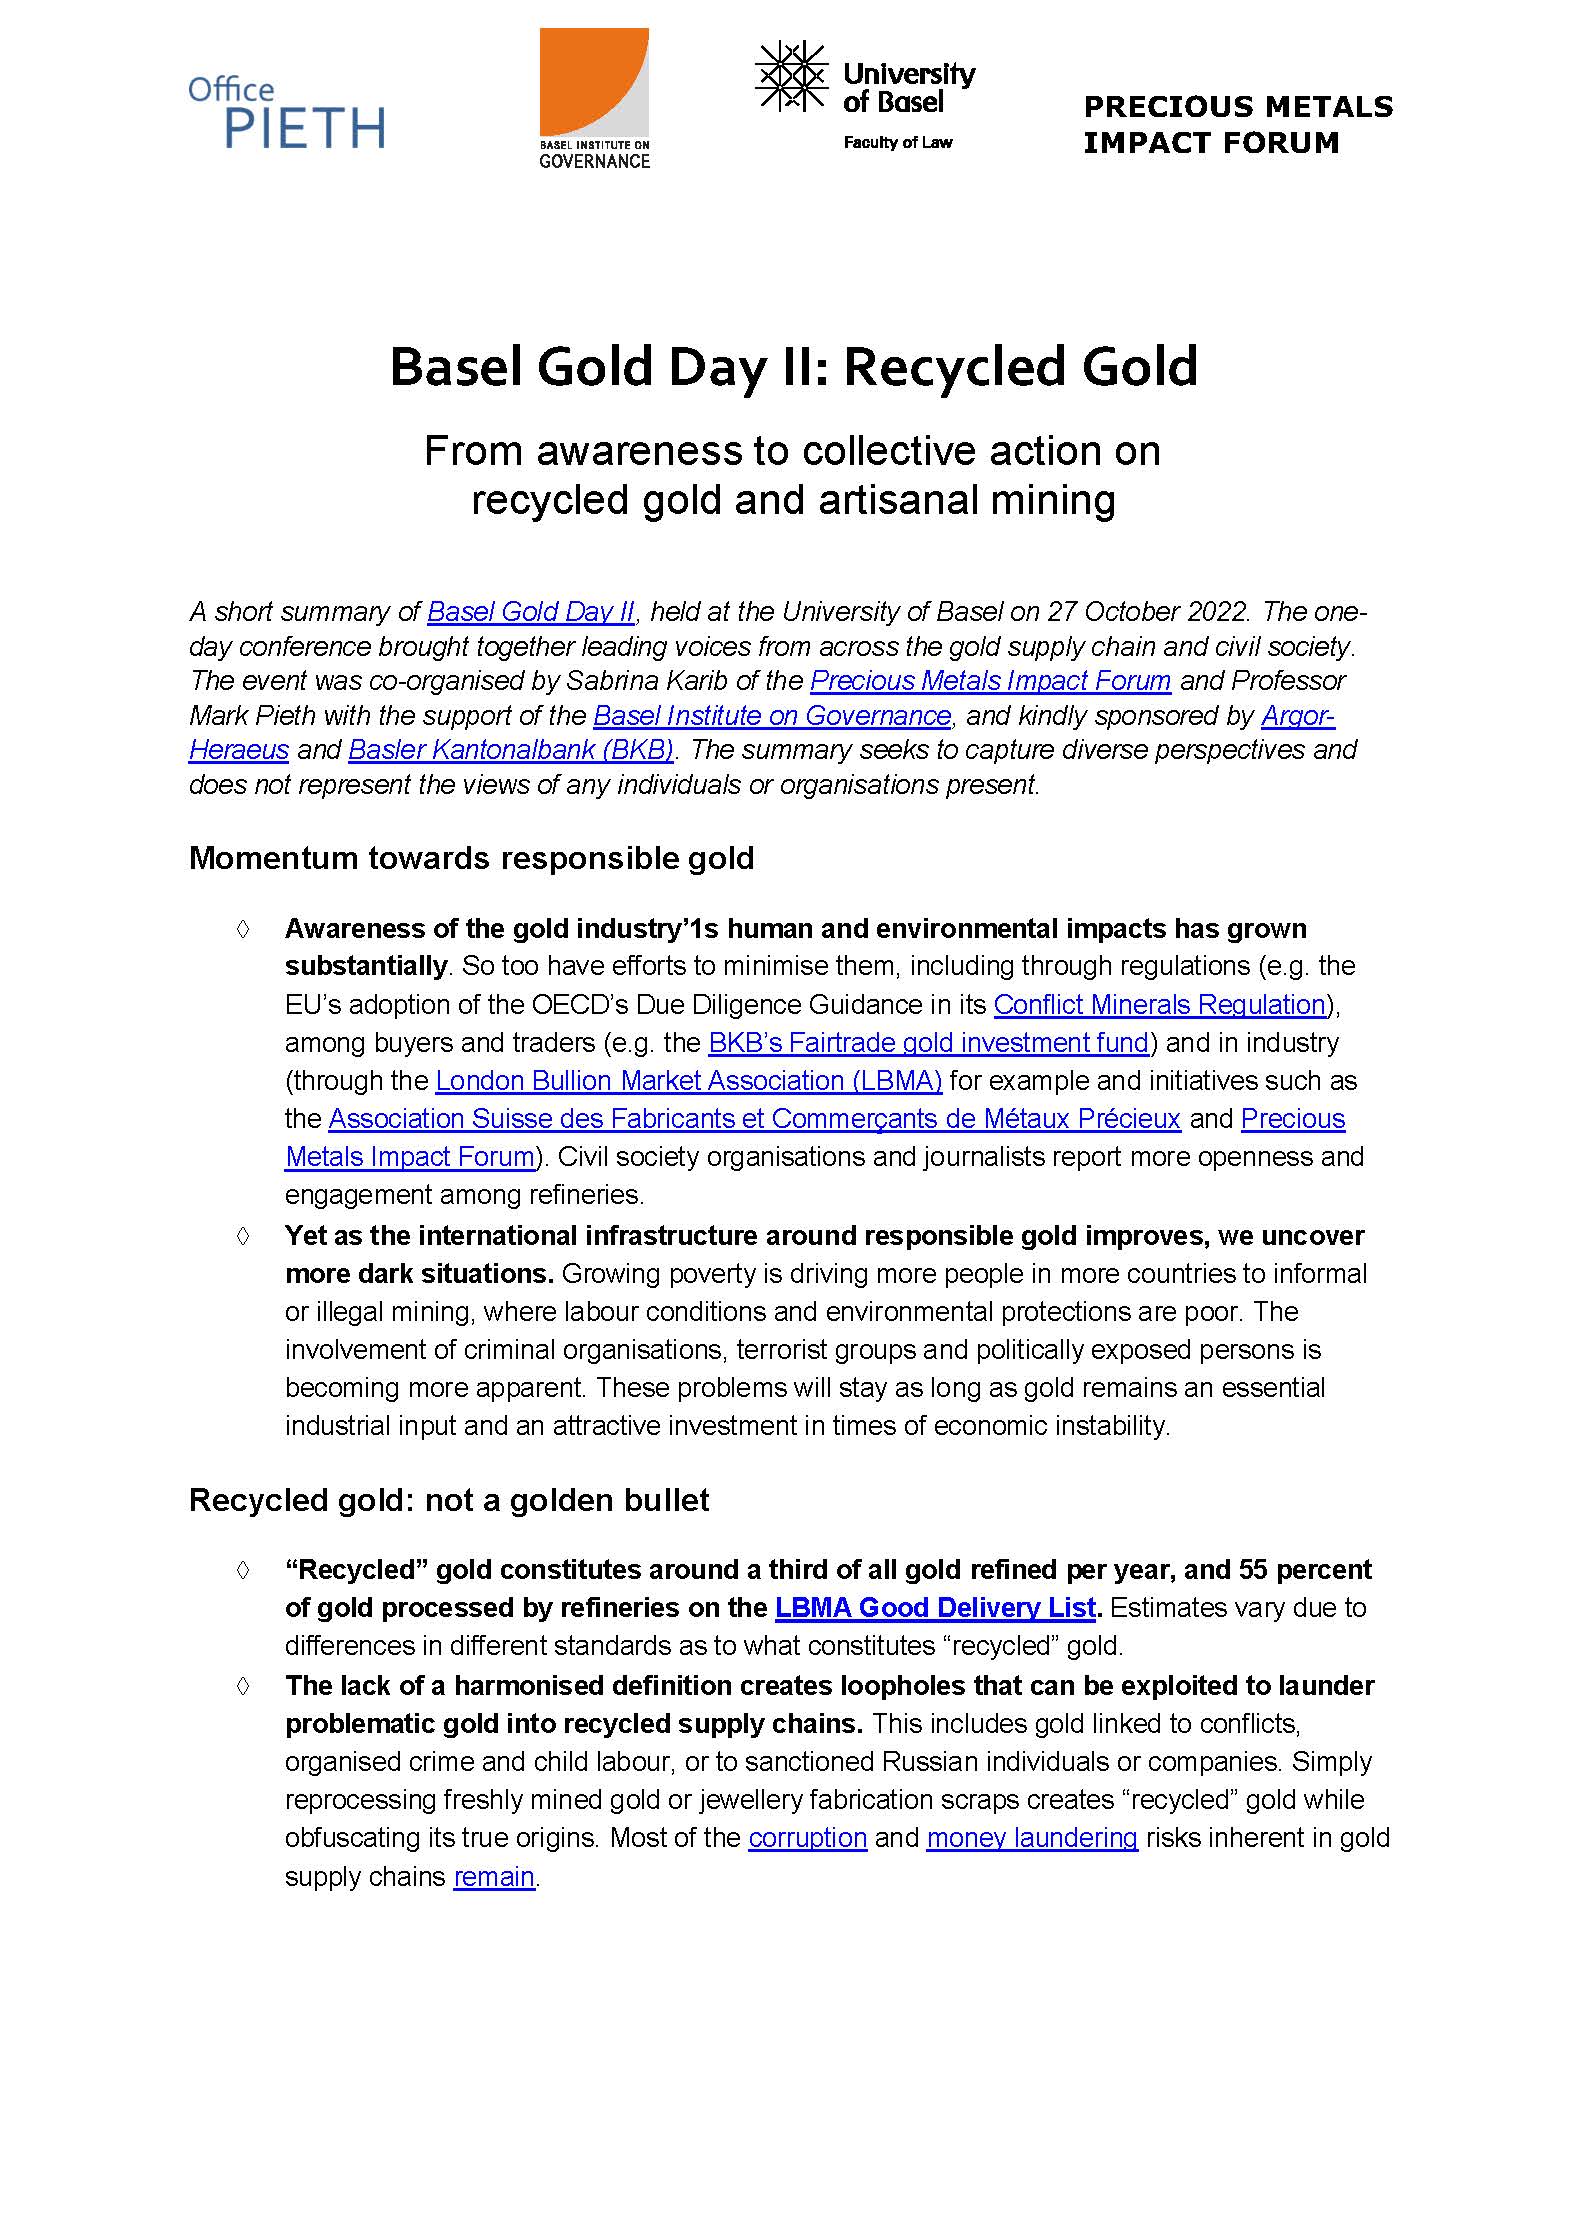 Gold Day II summary